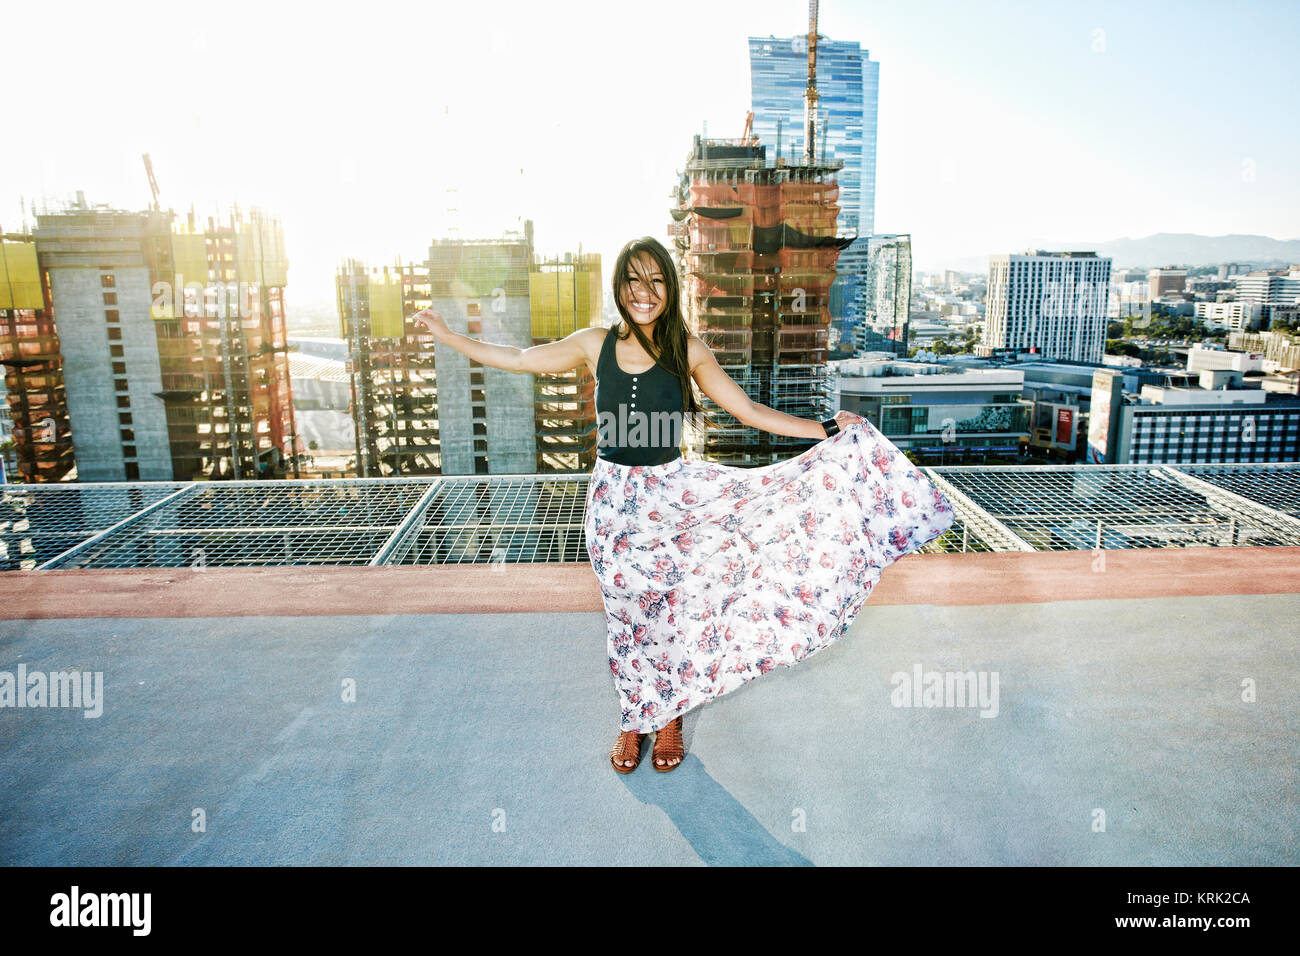 Asian woman dancing on urban rooftop Stock Photo